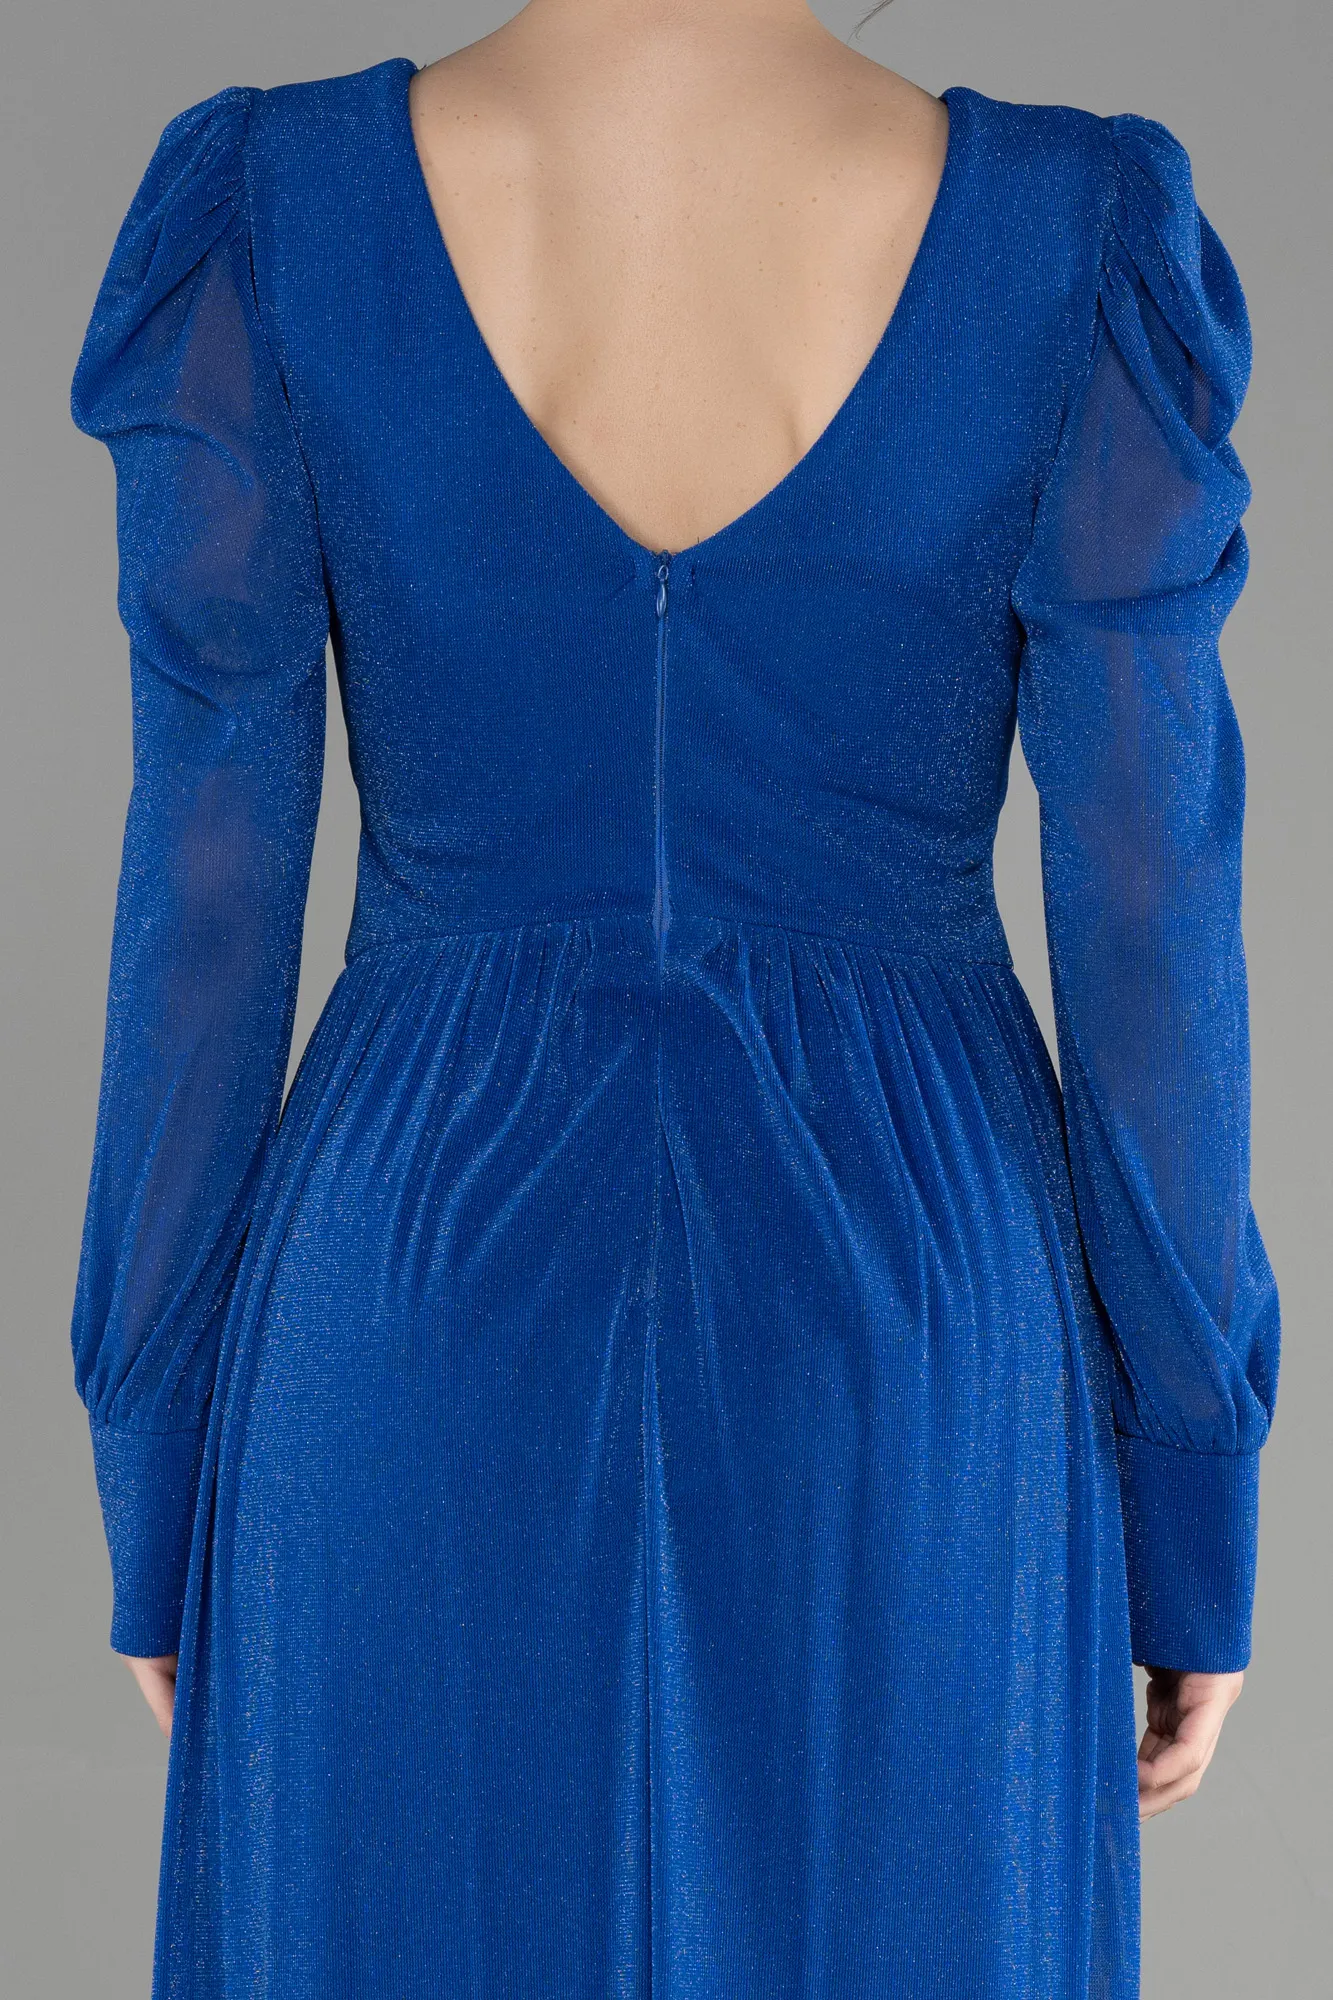 Sax Blue-Long Evening Dress ABU3103